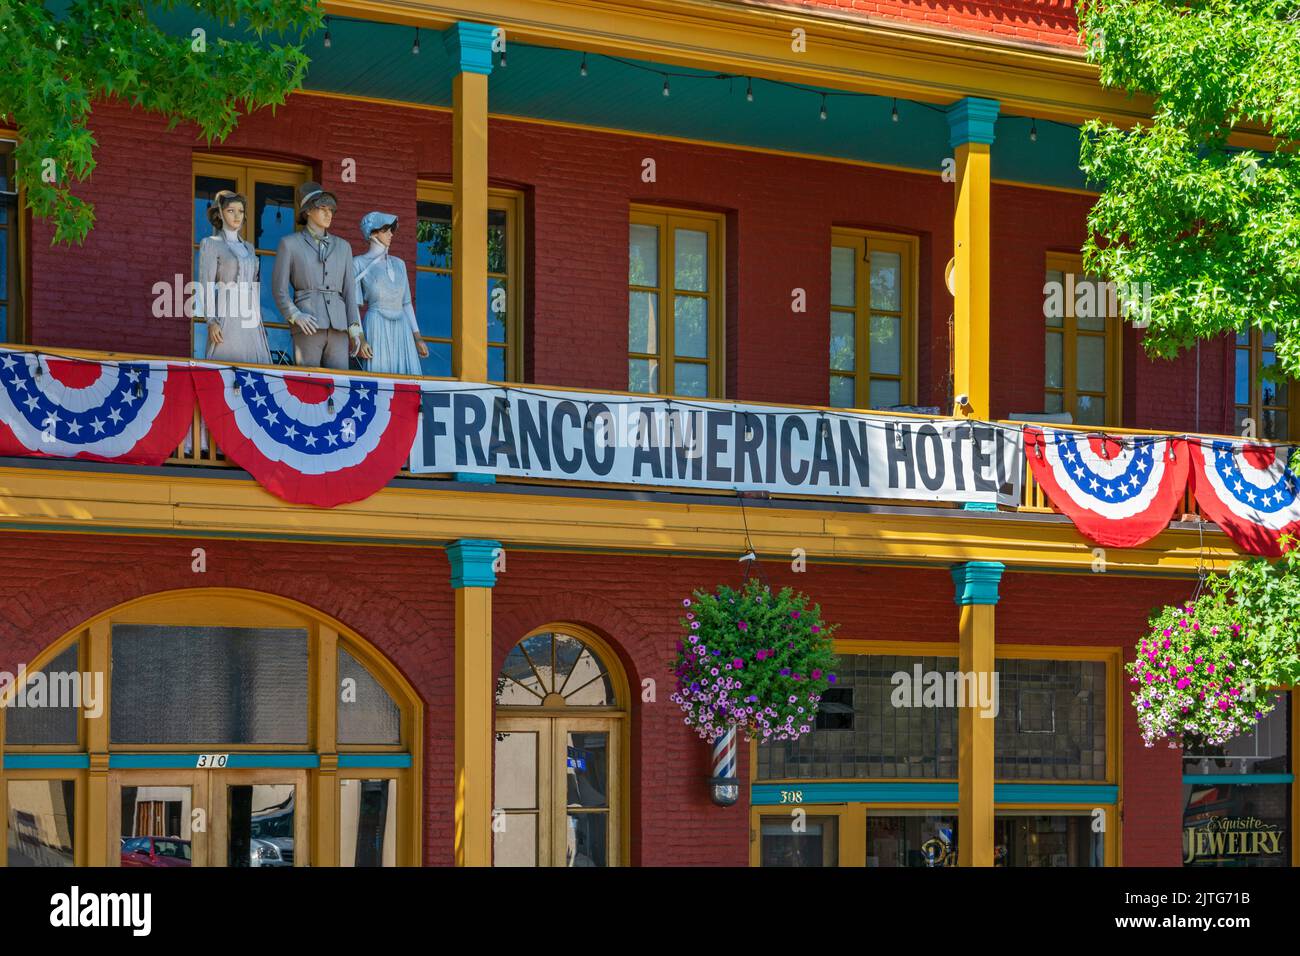 California, Yreka, Altstadt, Franco American Hotel, gestartet 1855, Schaufensterpuppen auf dem Balkon Stockfoto